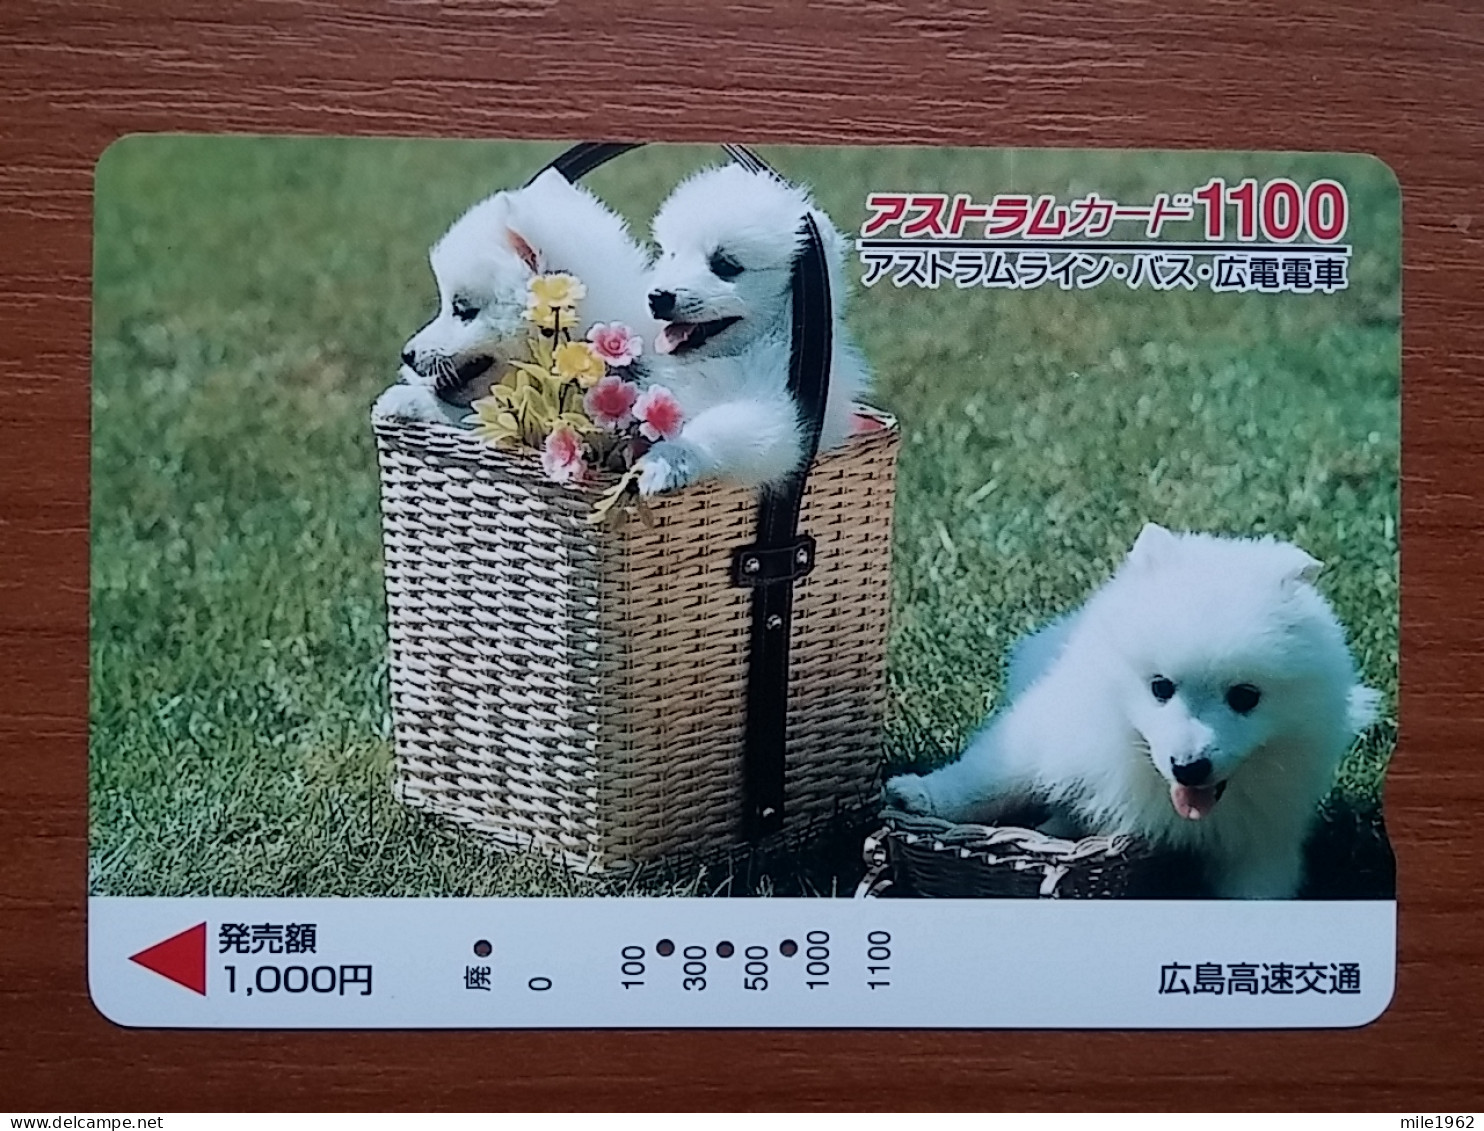 T-398 - JAPAN, Japon, Nipon, Carte Prepayee, Prepaid Card, Dog, Chien - Dogs